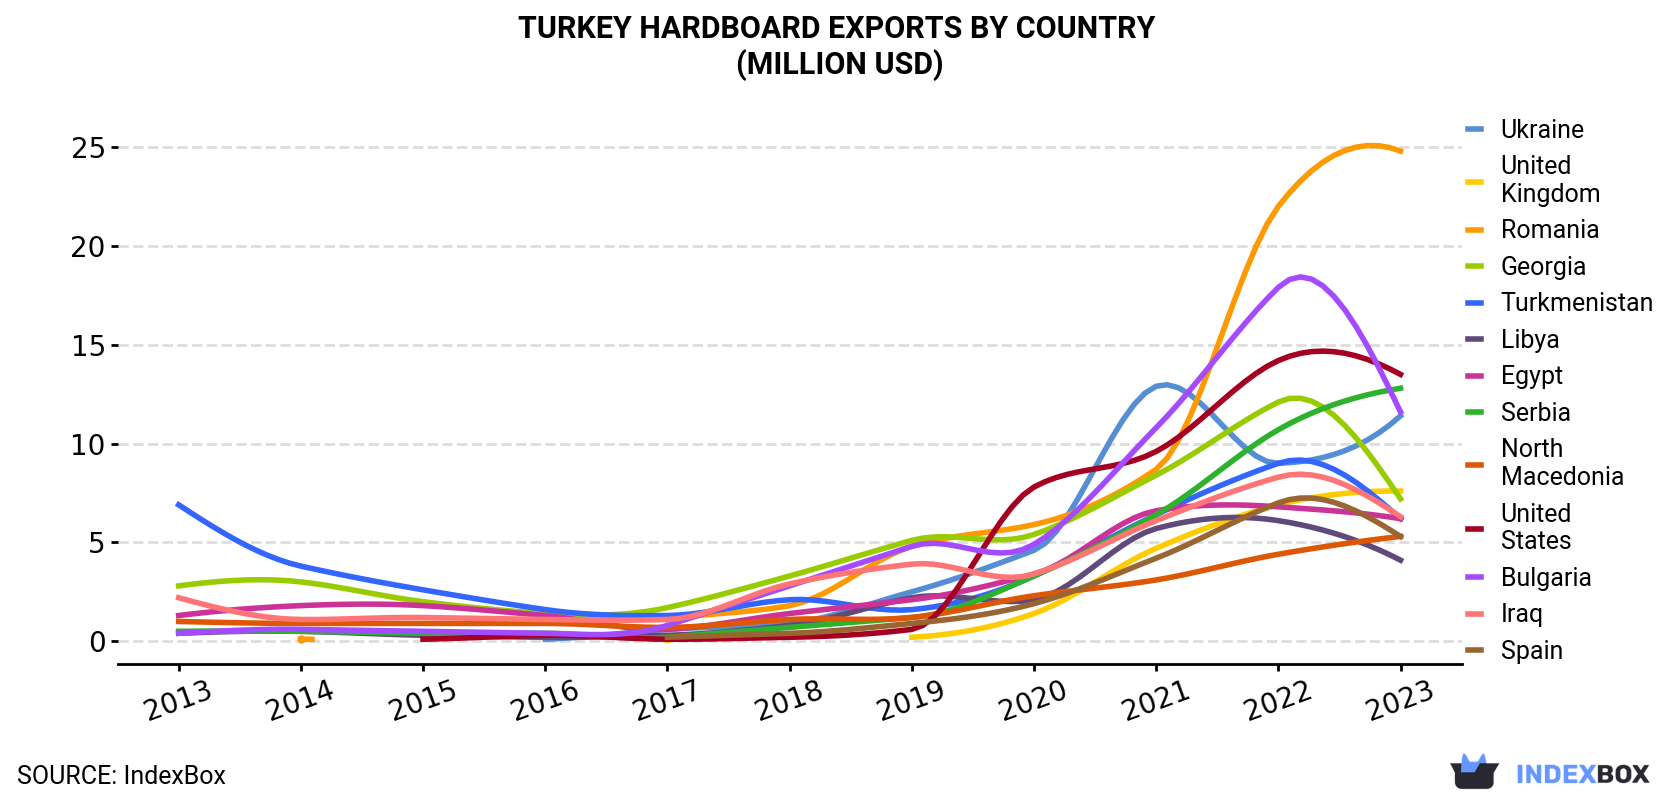 Turkey Hardboard Exports By Country (Million USD)